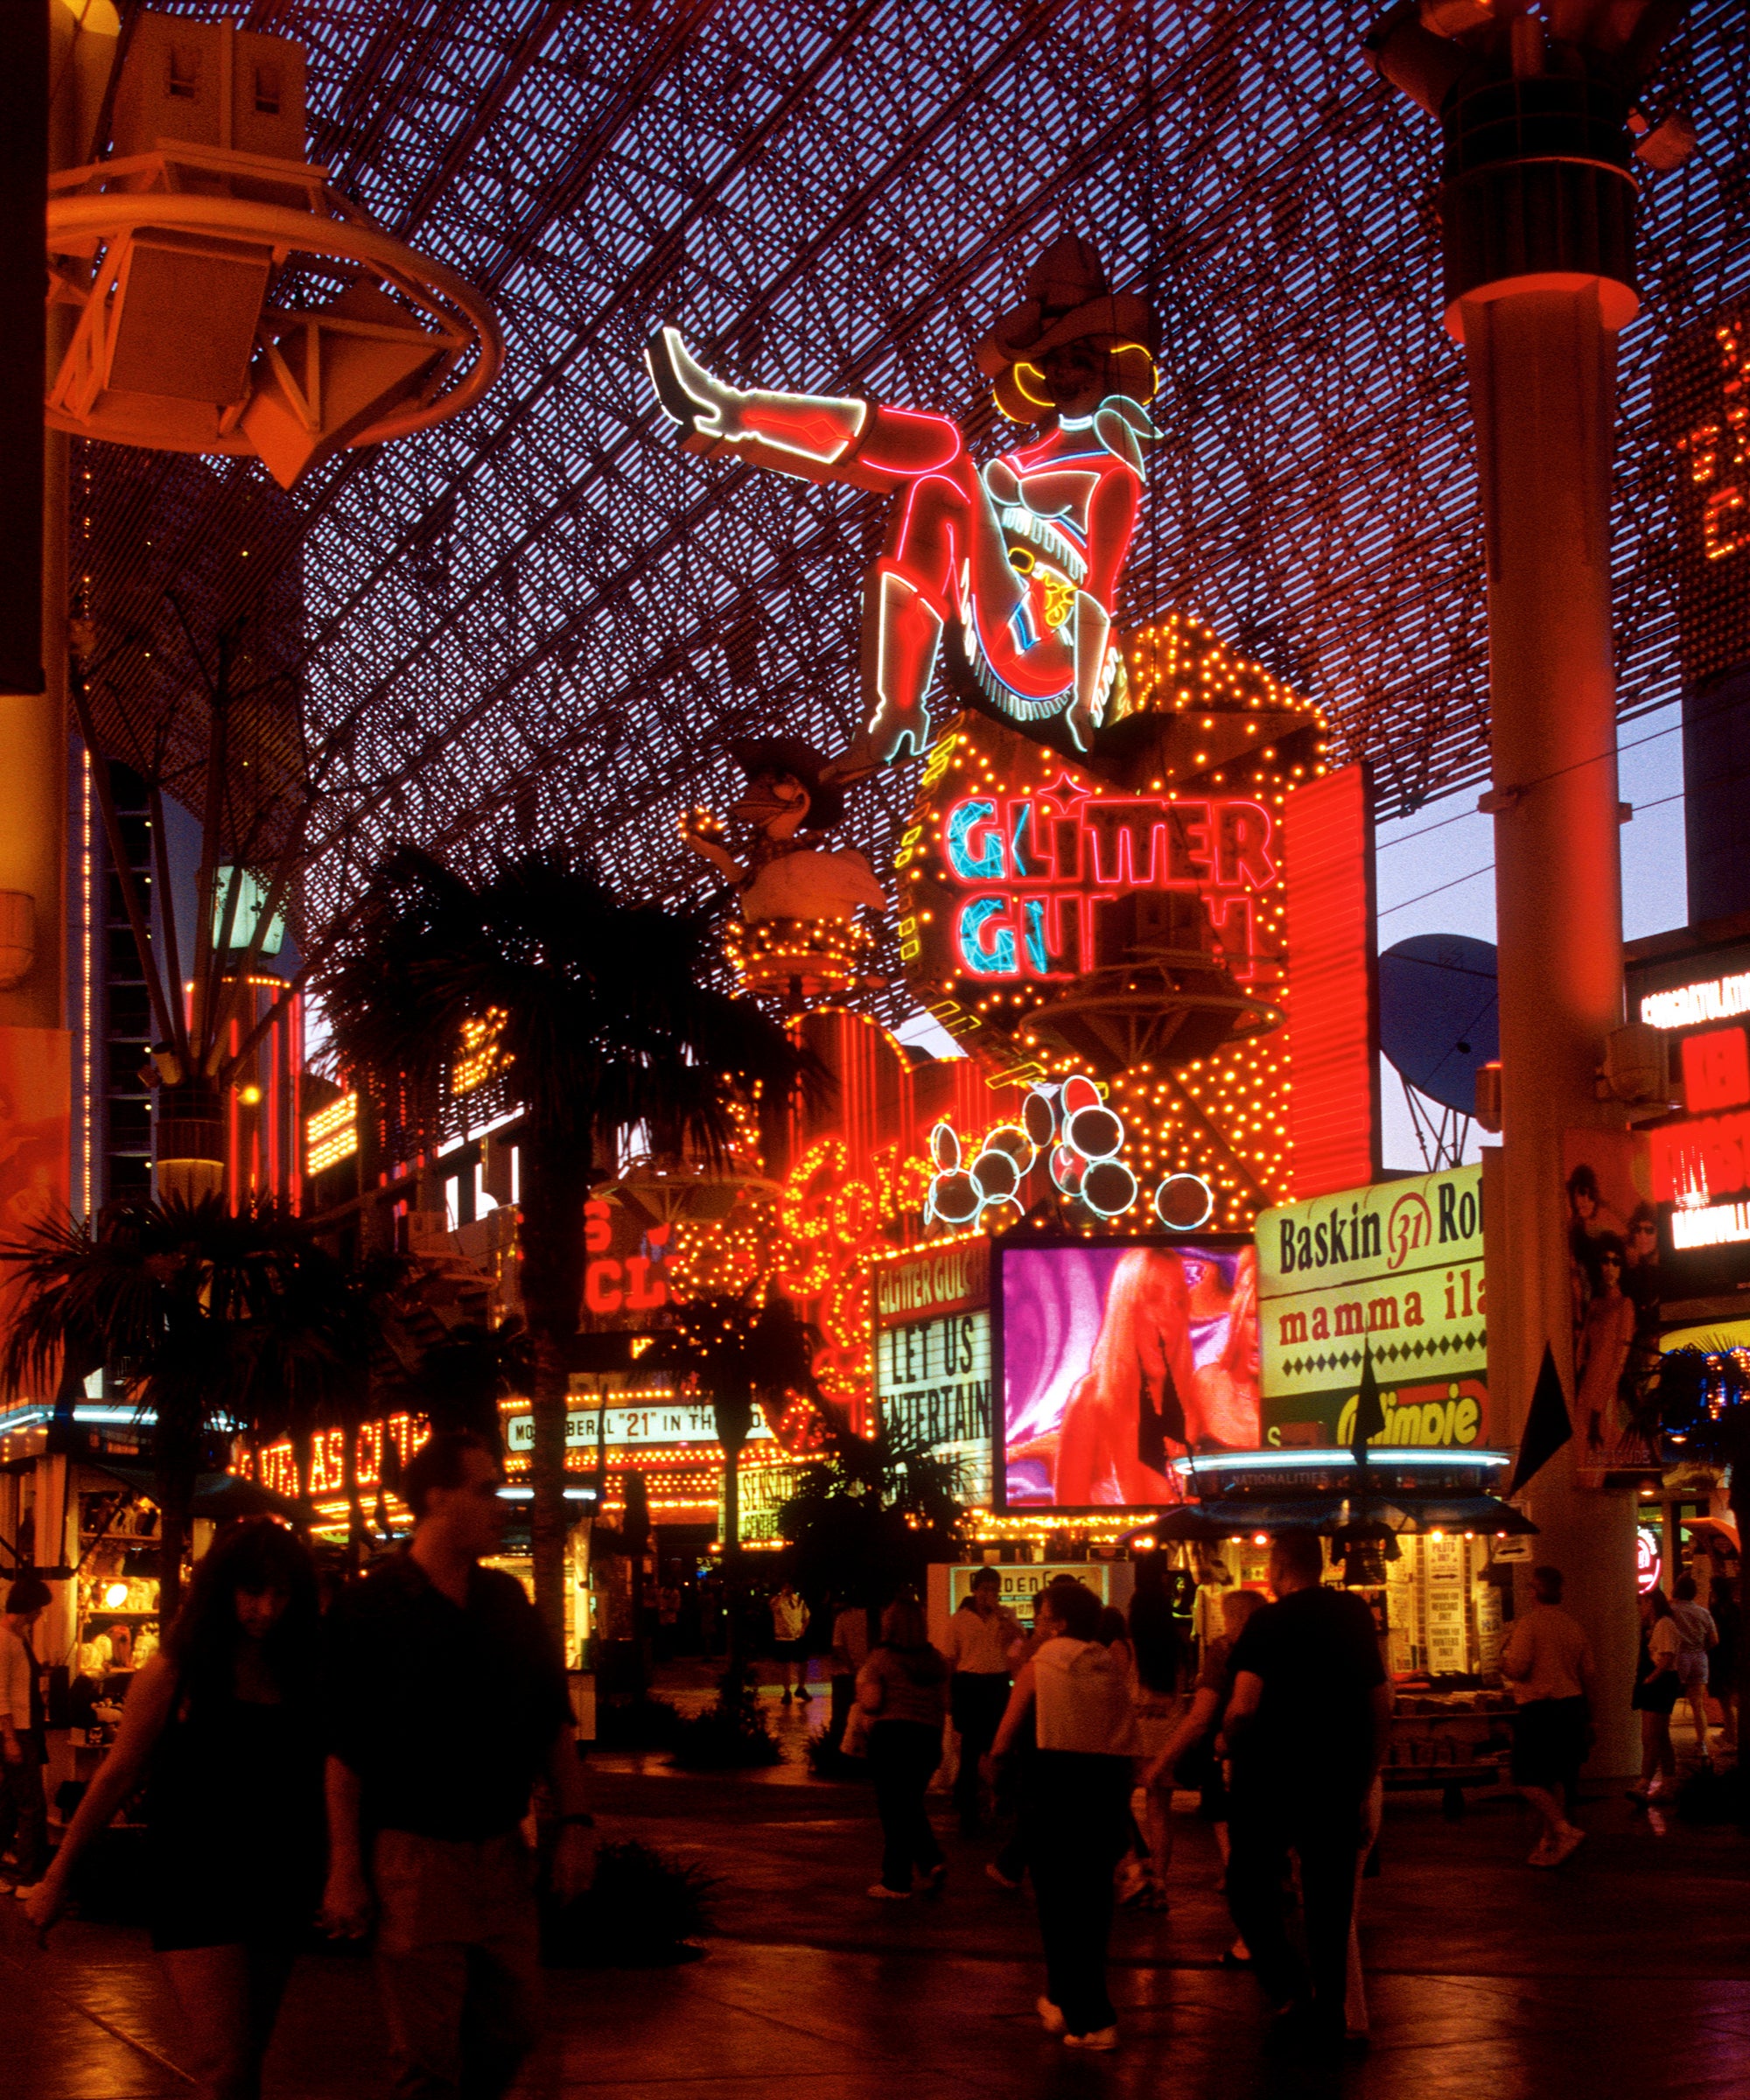 Las Vegas In September: 5 Most Enjoyable Activities To Indulge In